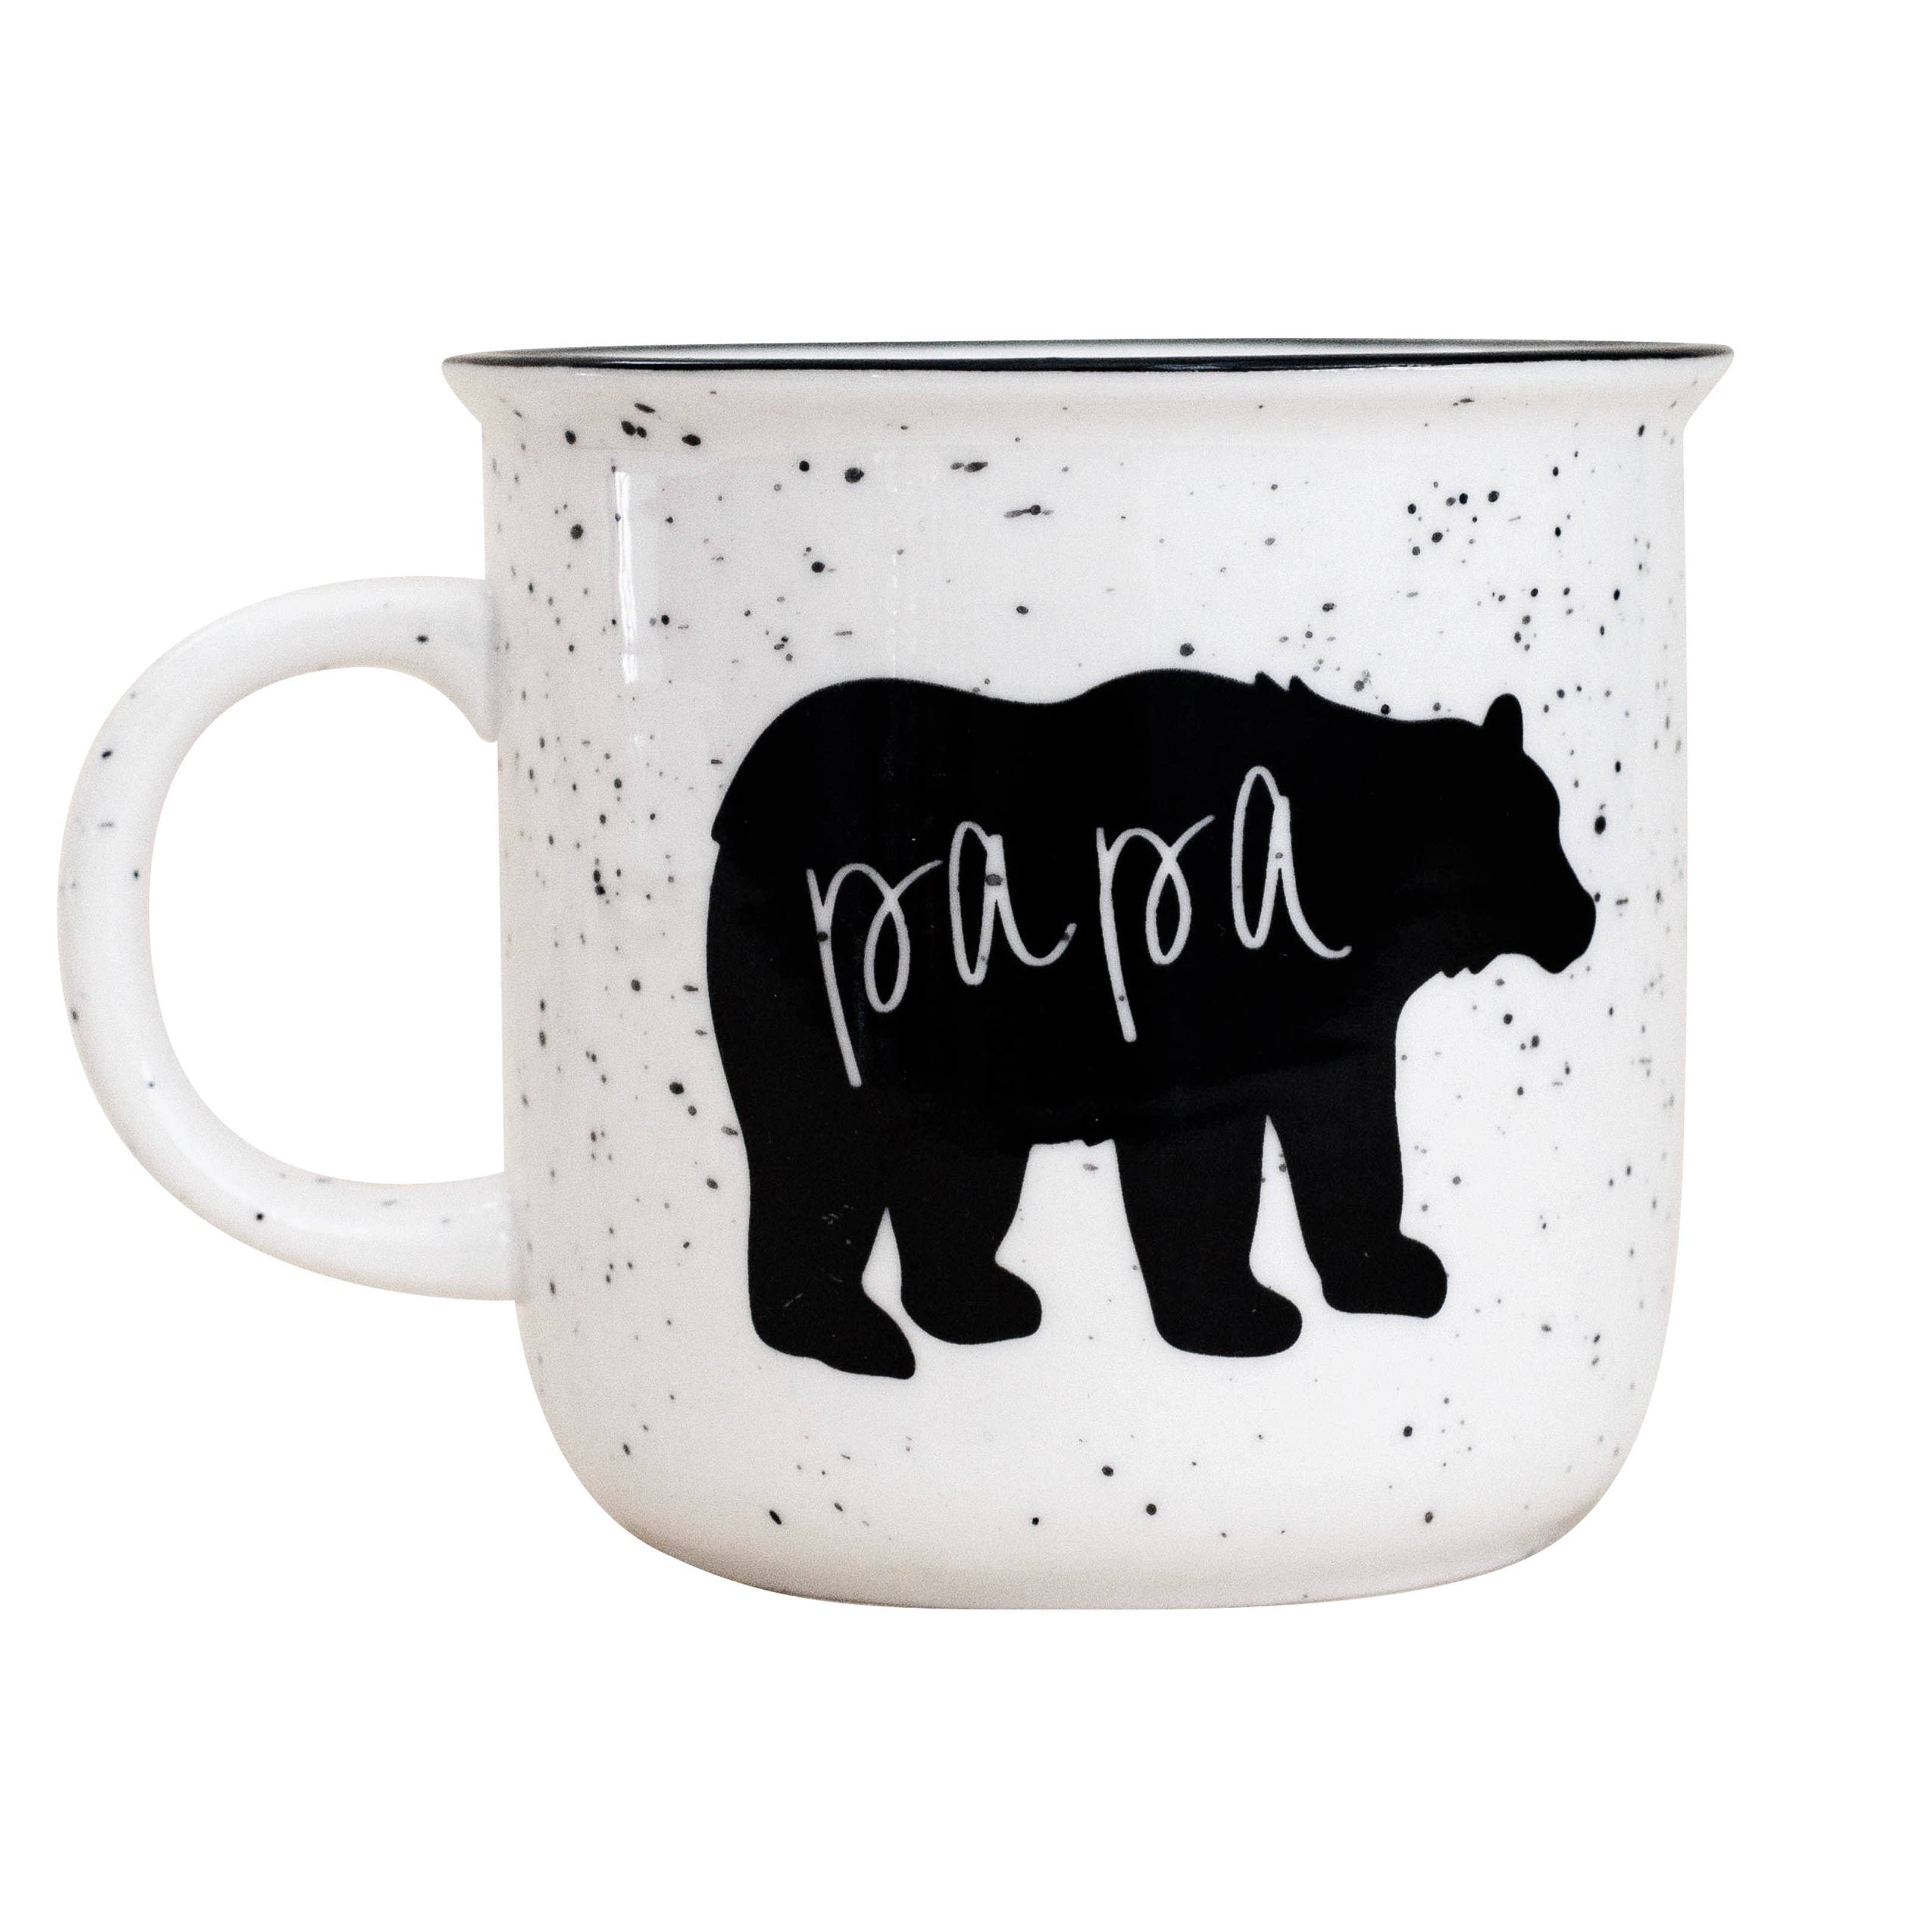 Papa Bear Rustic Campfire Coffee Mug